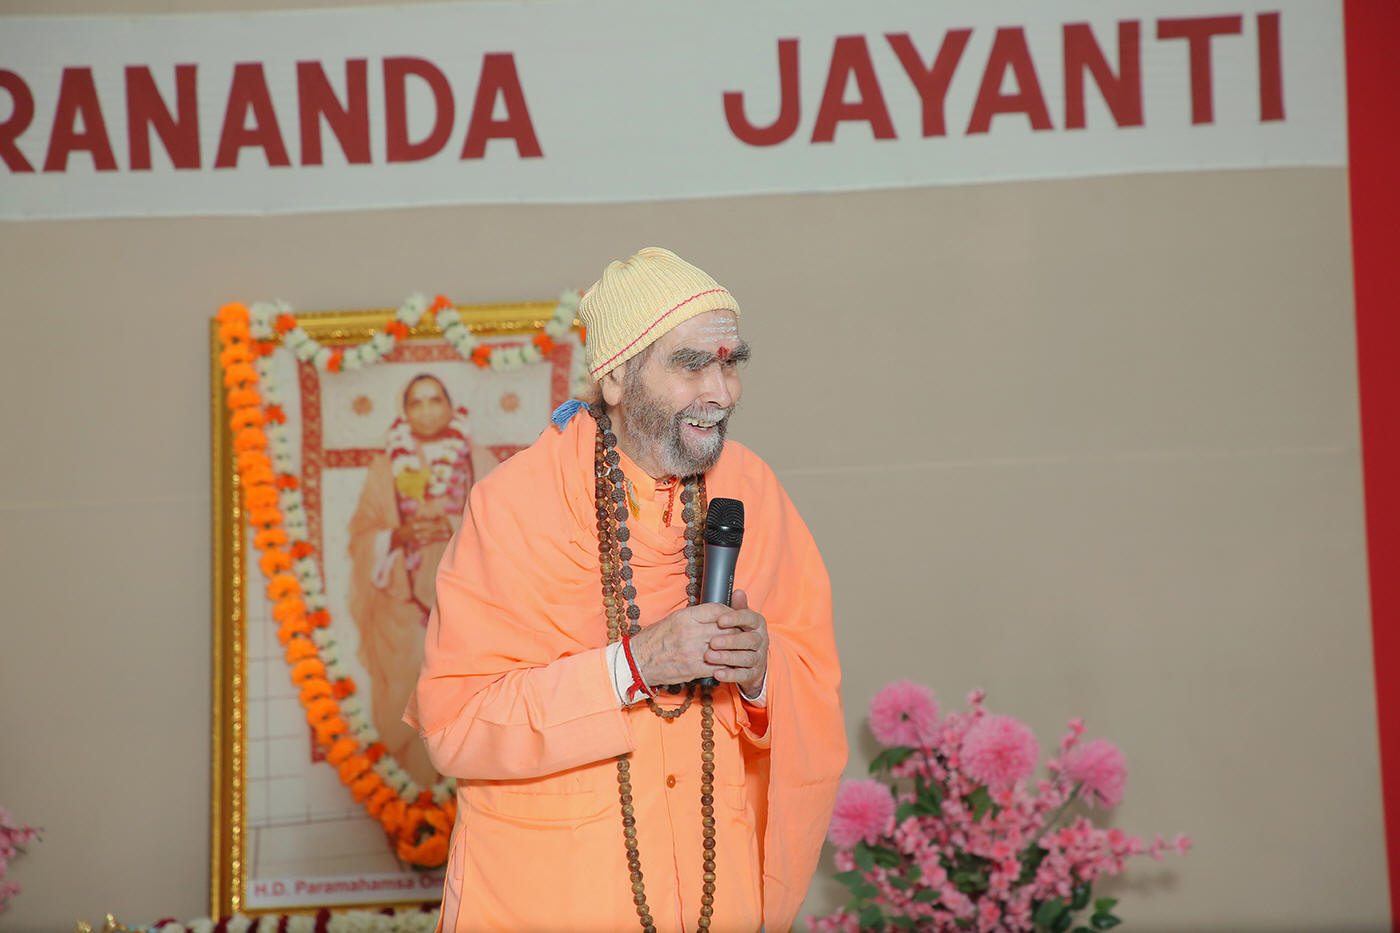 What is the importance of Guru Dakshina in the present scenario? - Quora